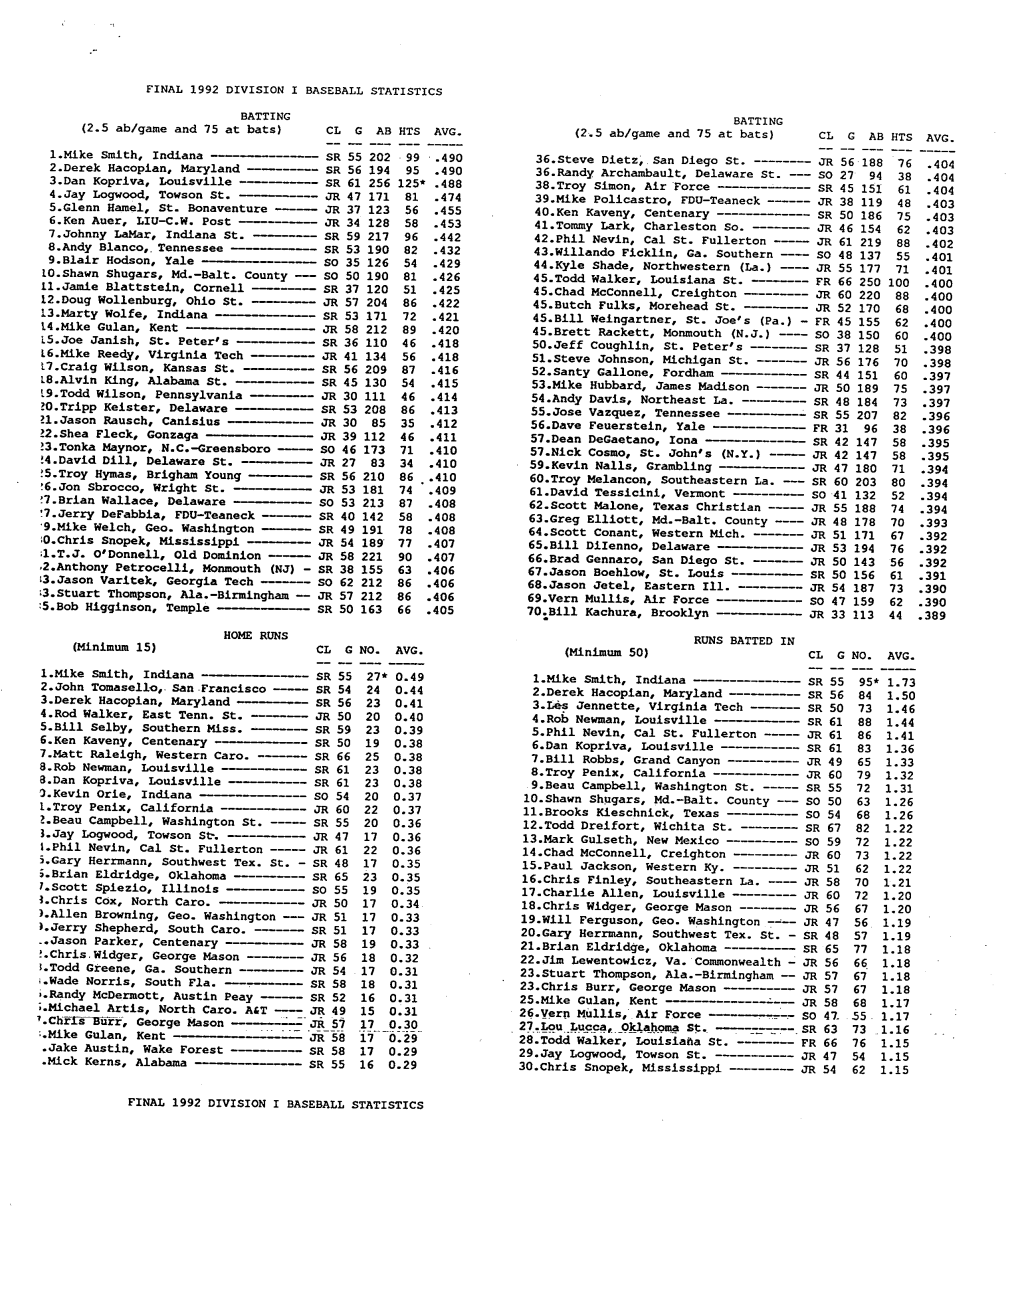 Final 1992 Division I Baseball Statistics